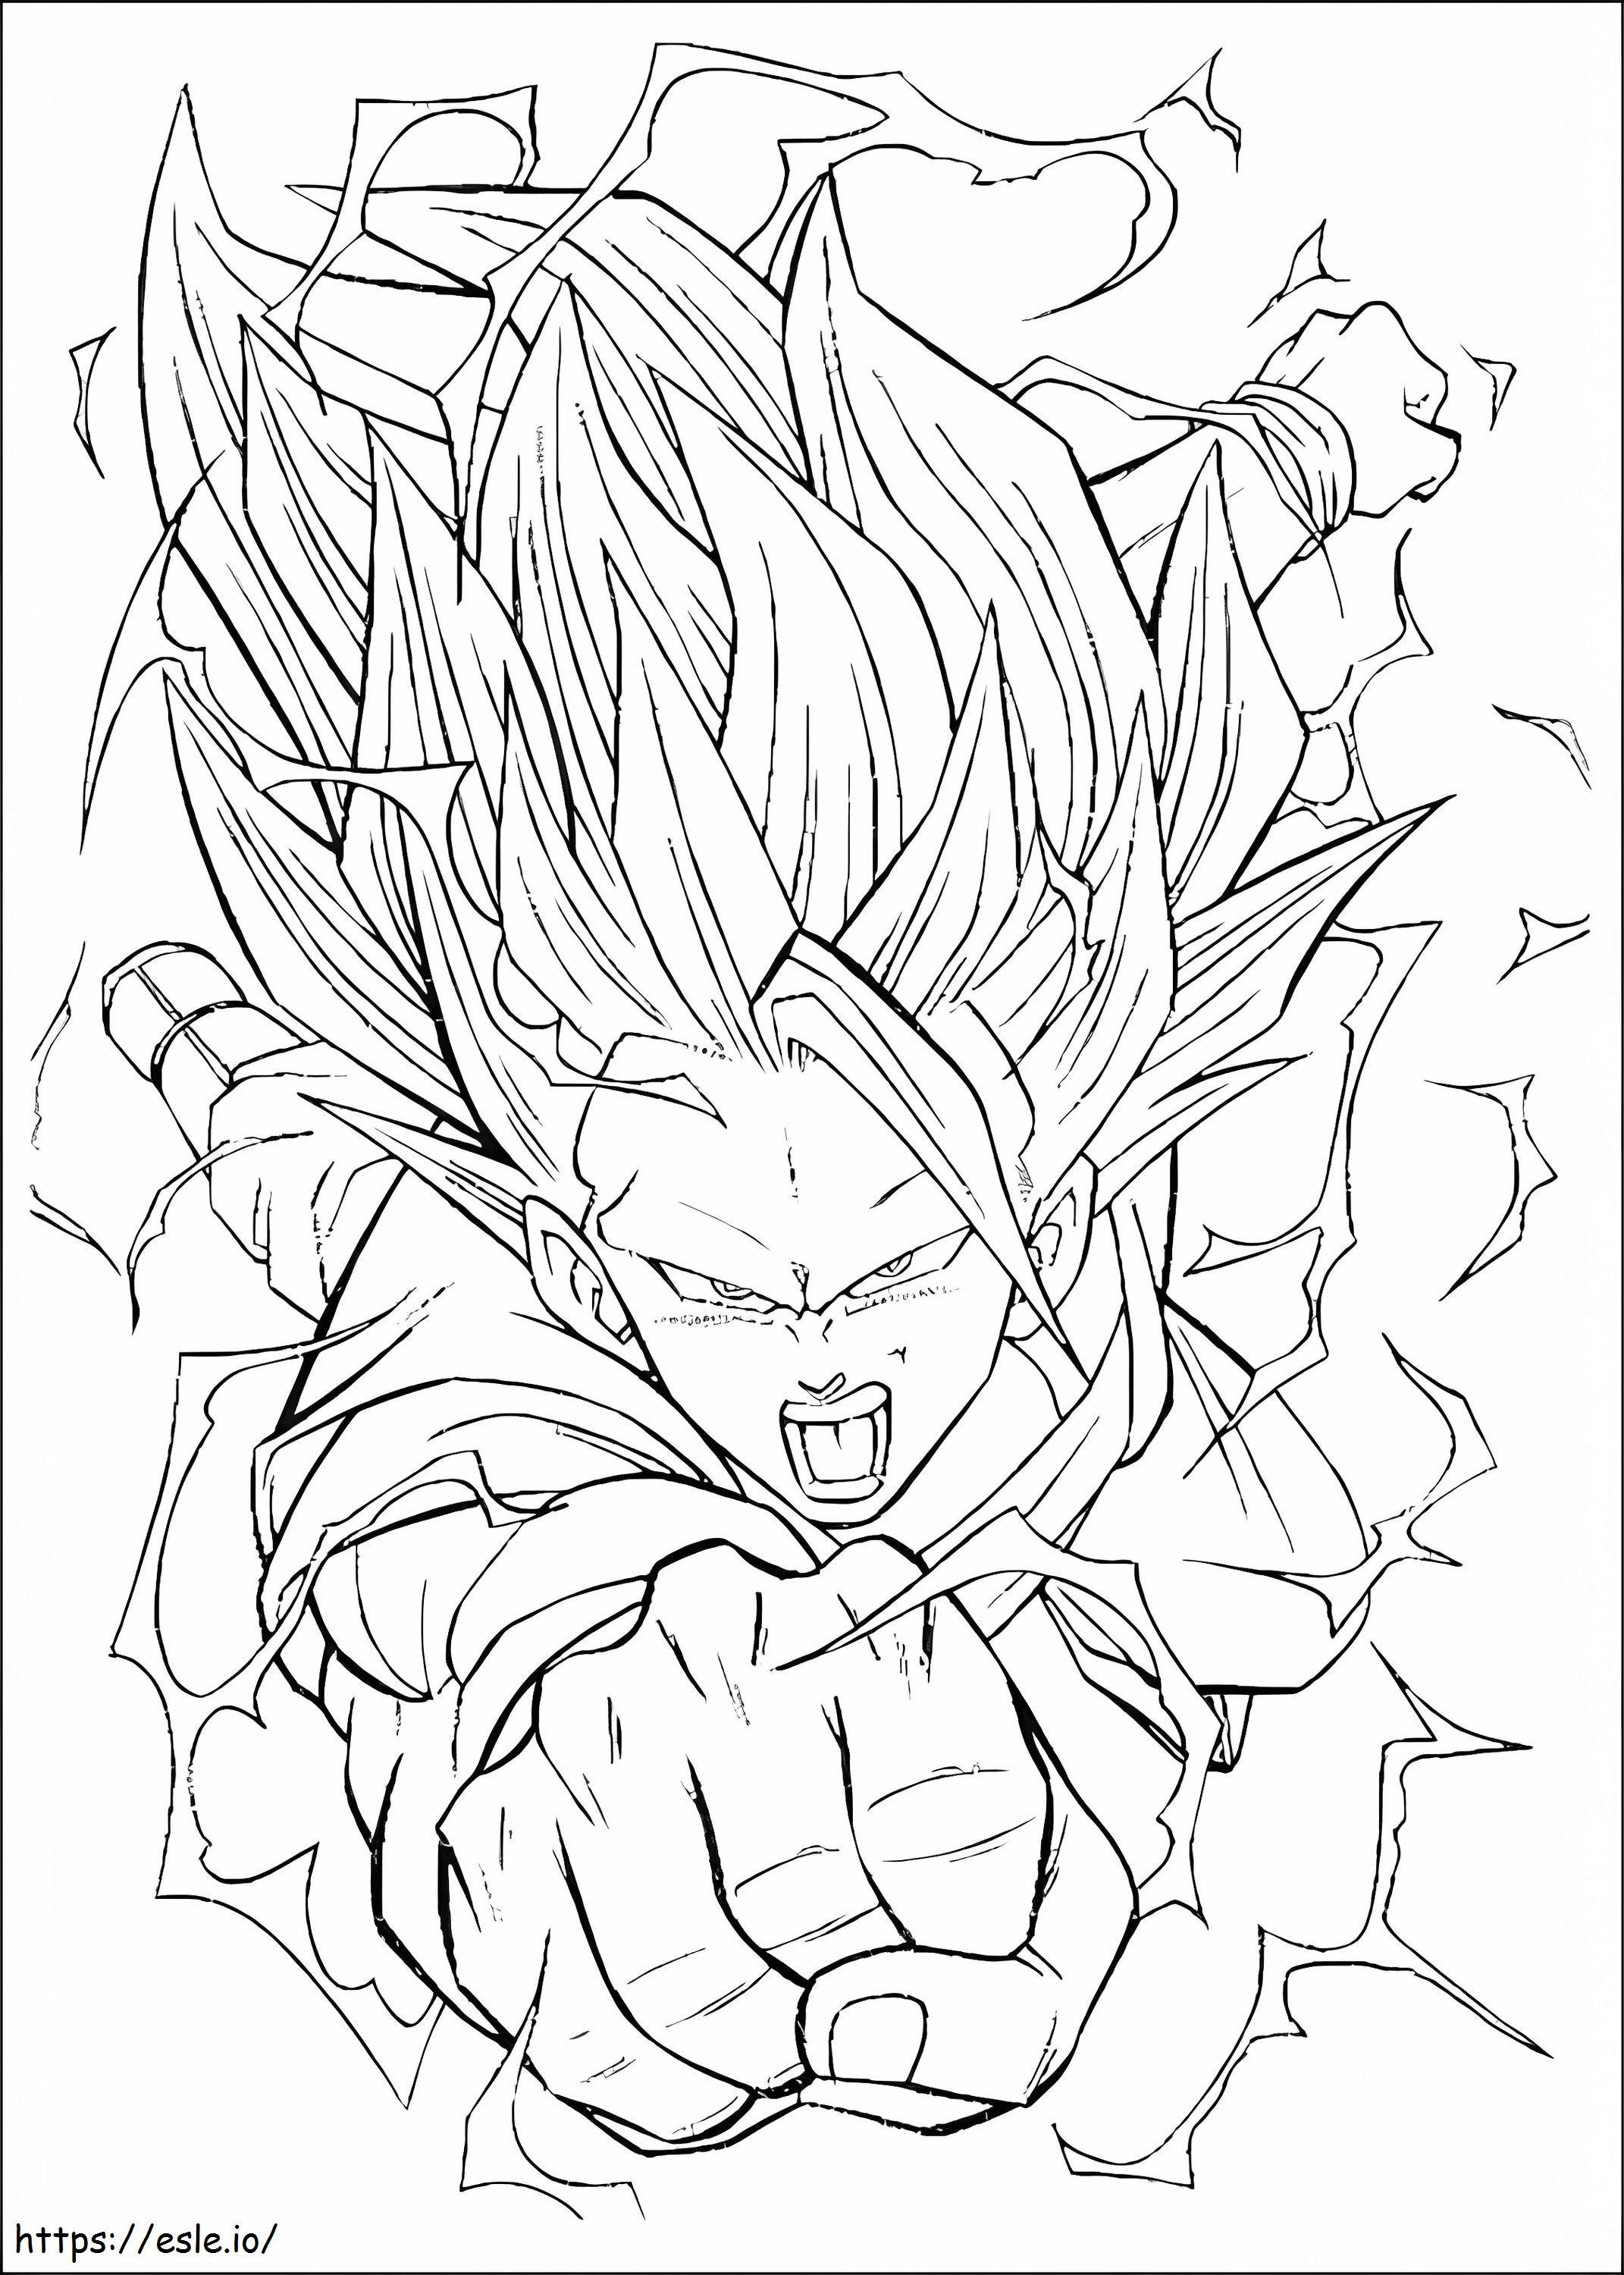 Son Goku Punching coloring page